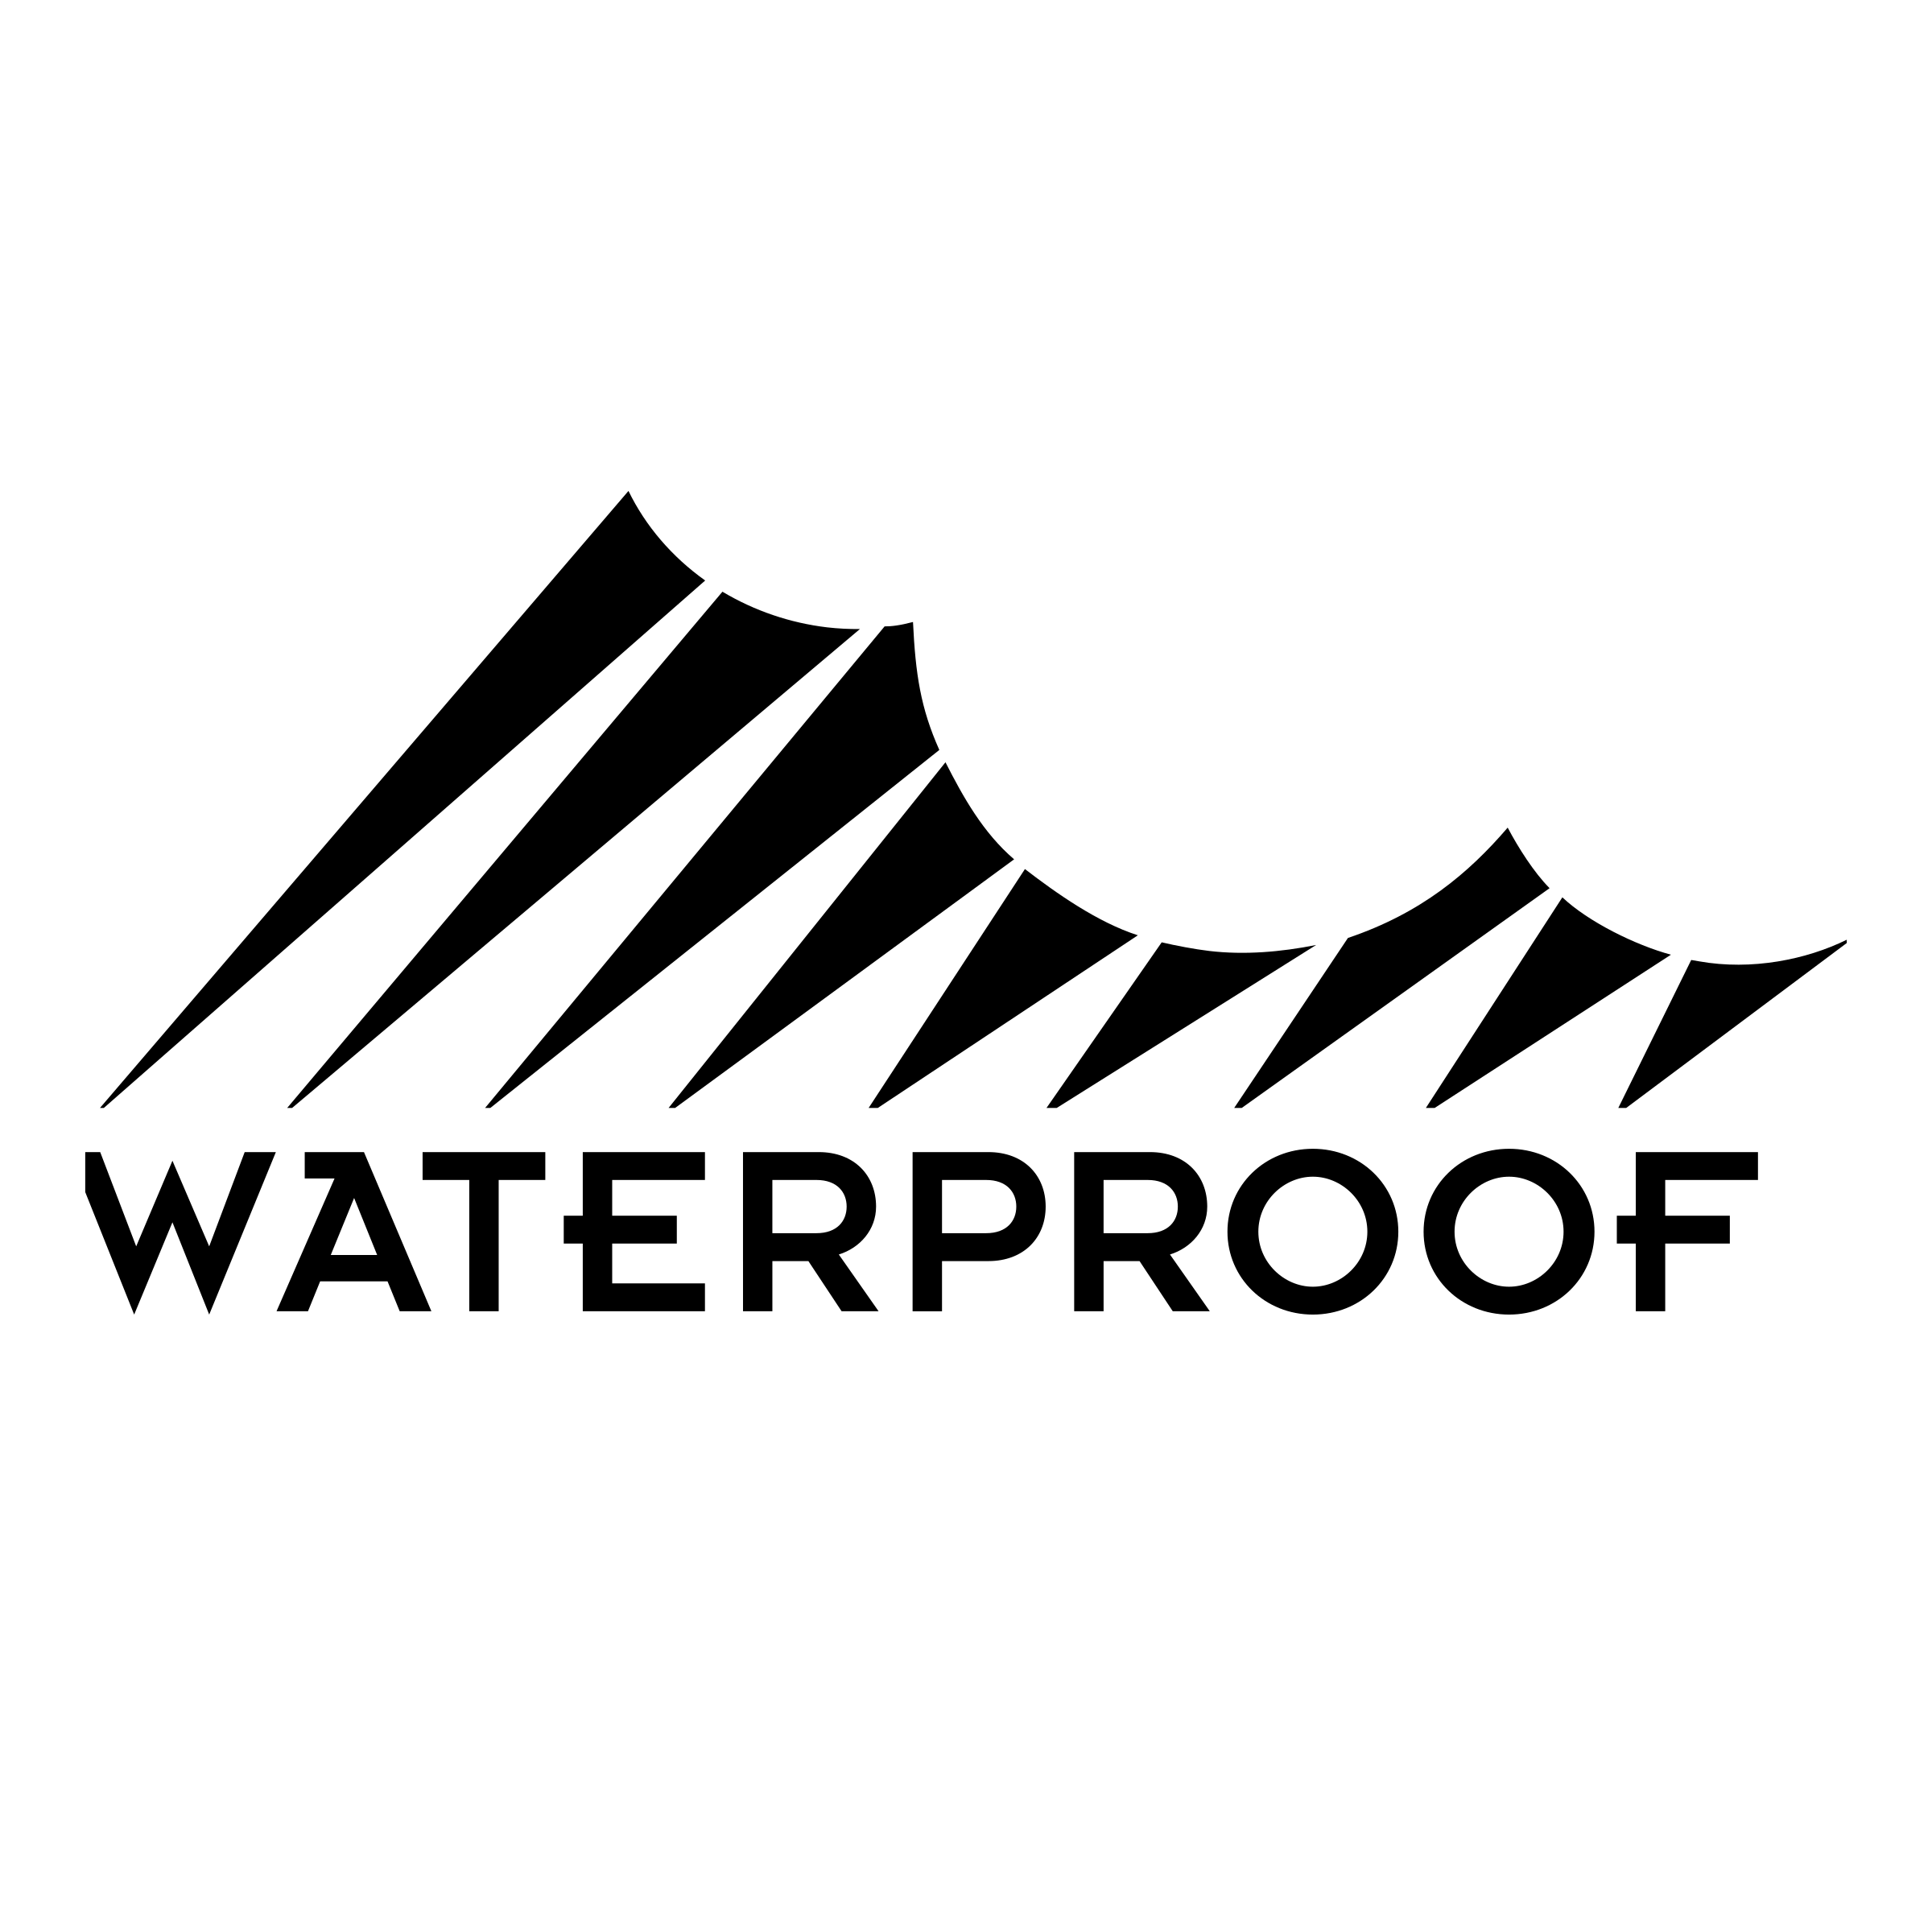 Waterproof Logo - Waterproof Logo PNG Transparent & SVG Vector